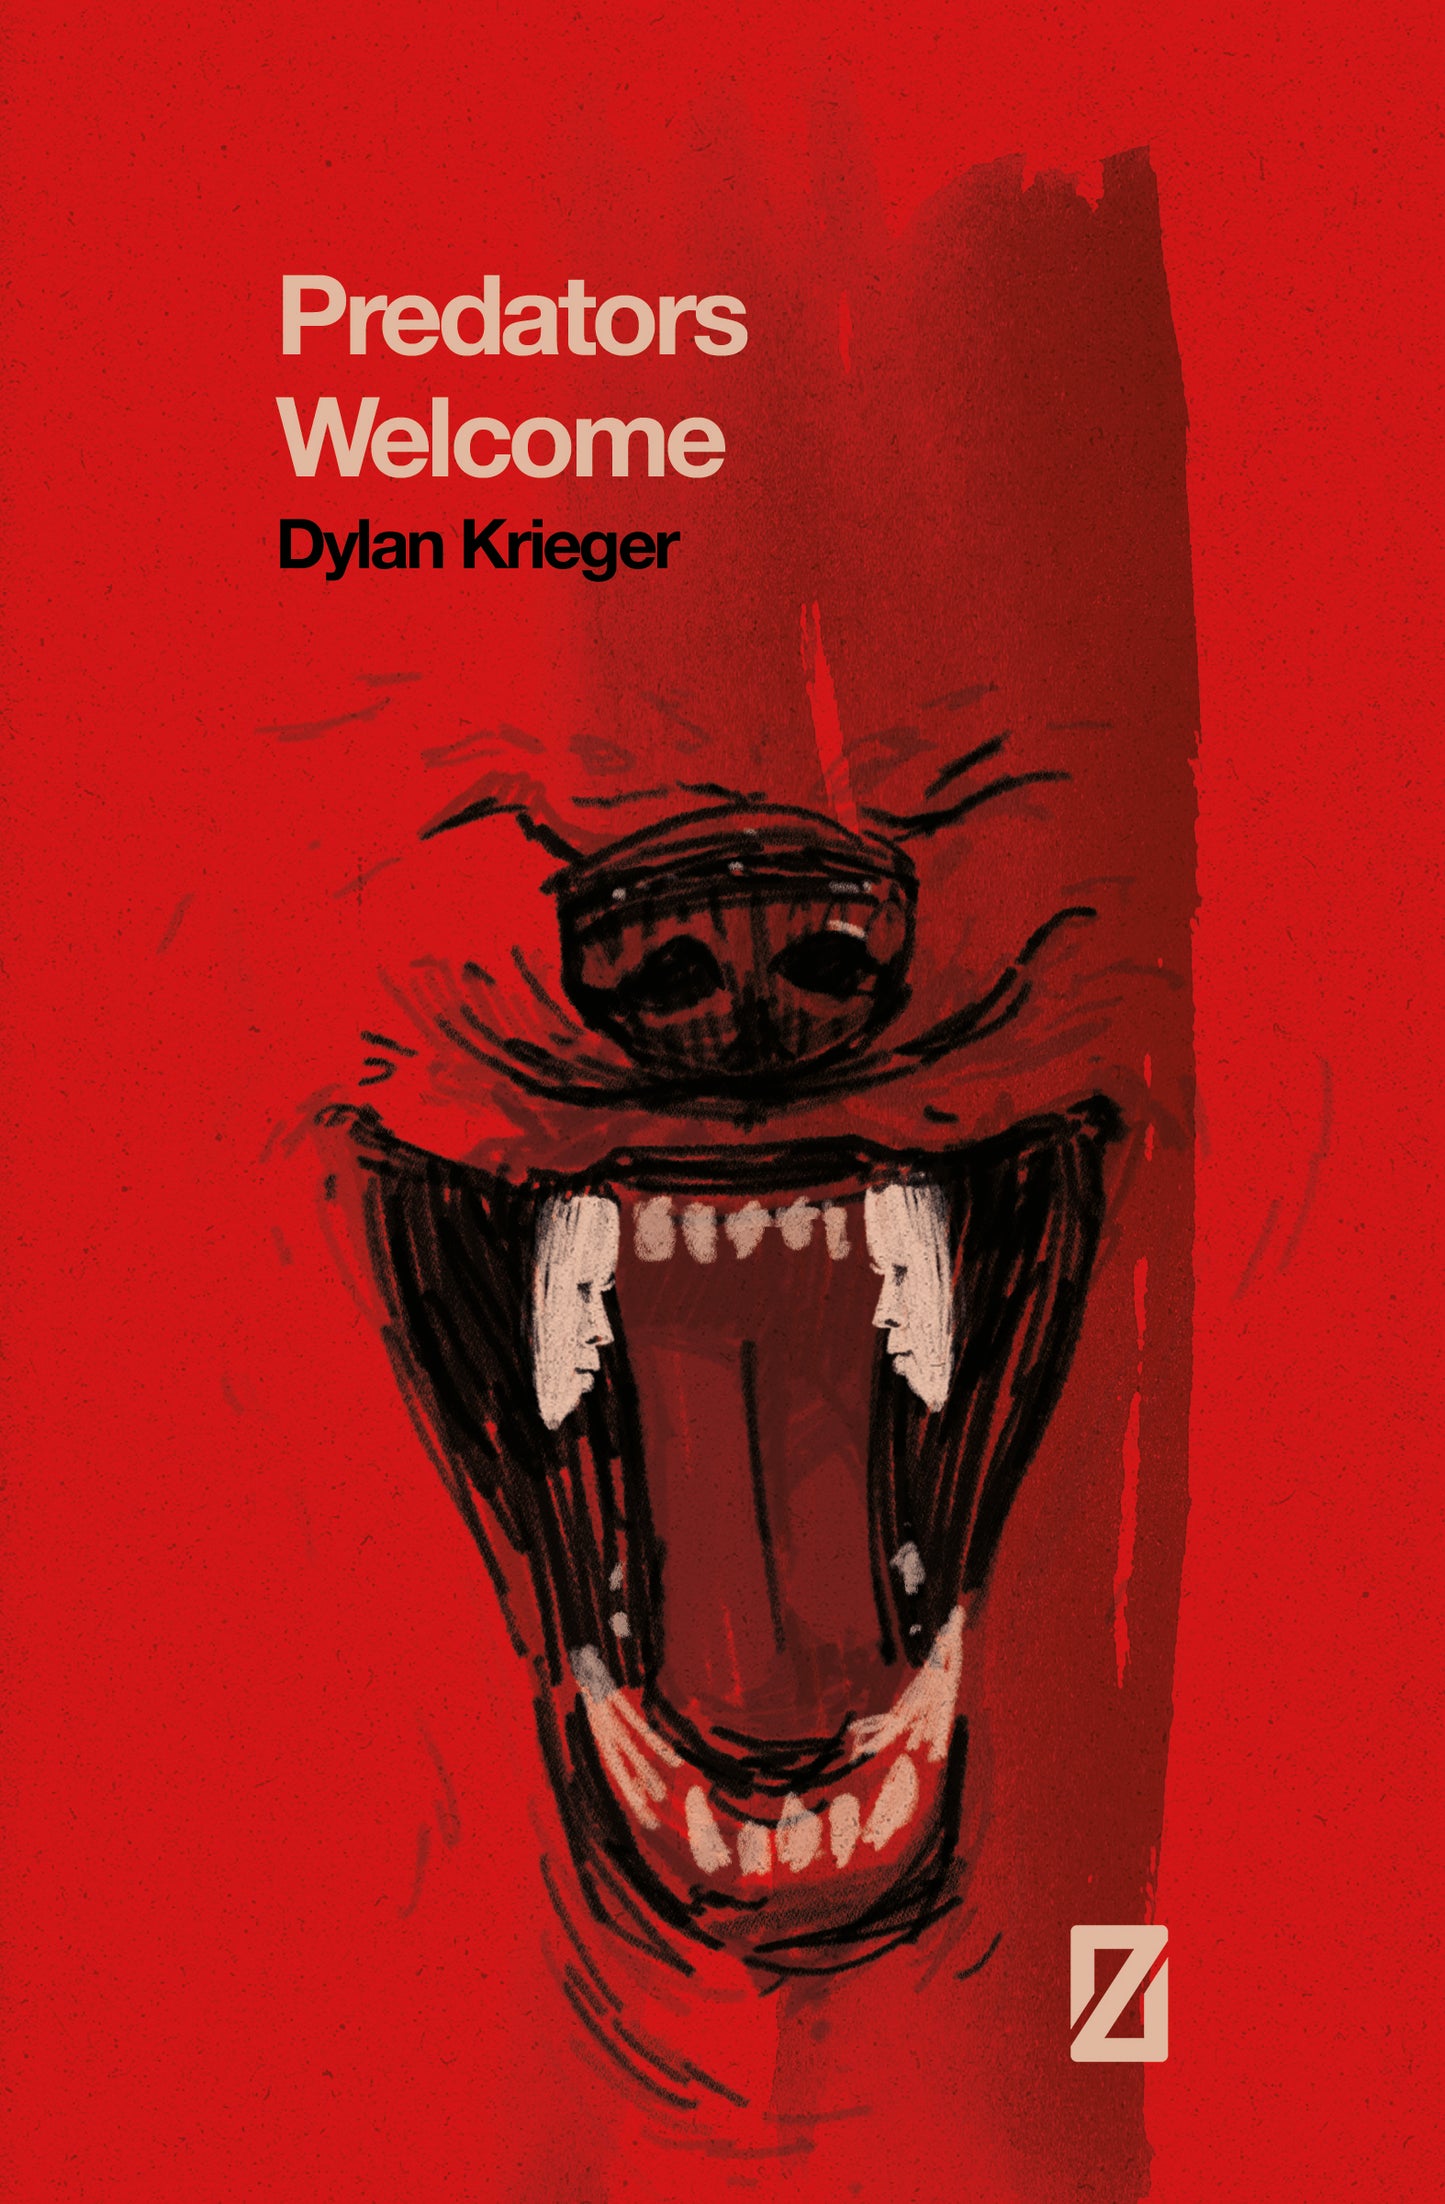 Predators Welcome by Dylan Krieger